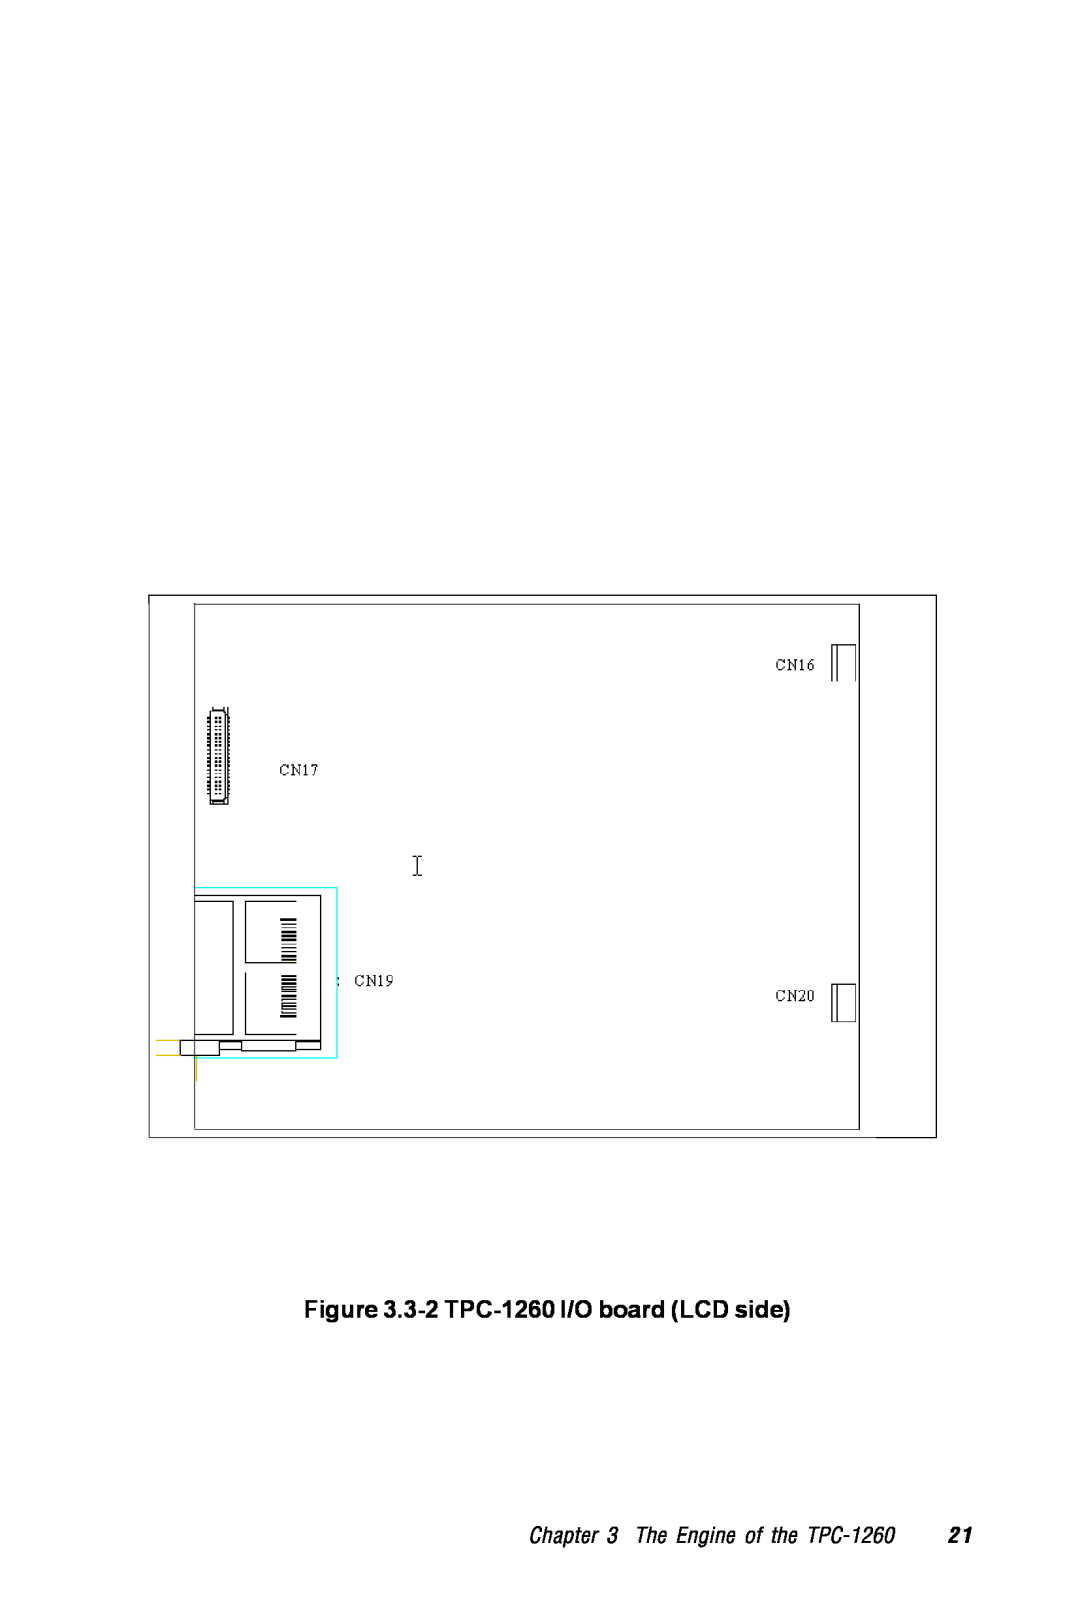 Advantech manual 3-2 TPC-1260 I/O board LCD side, The Engine of the TPC-1260 